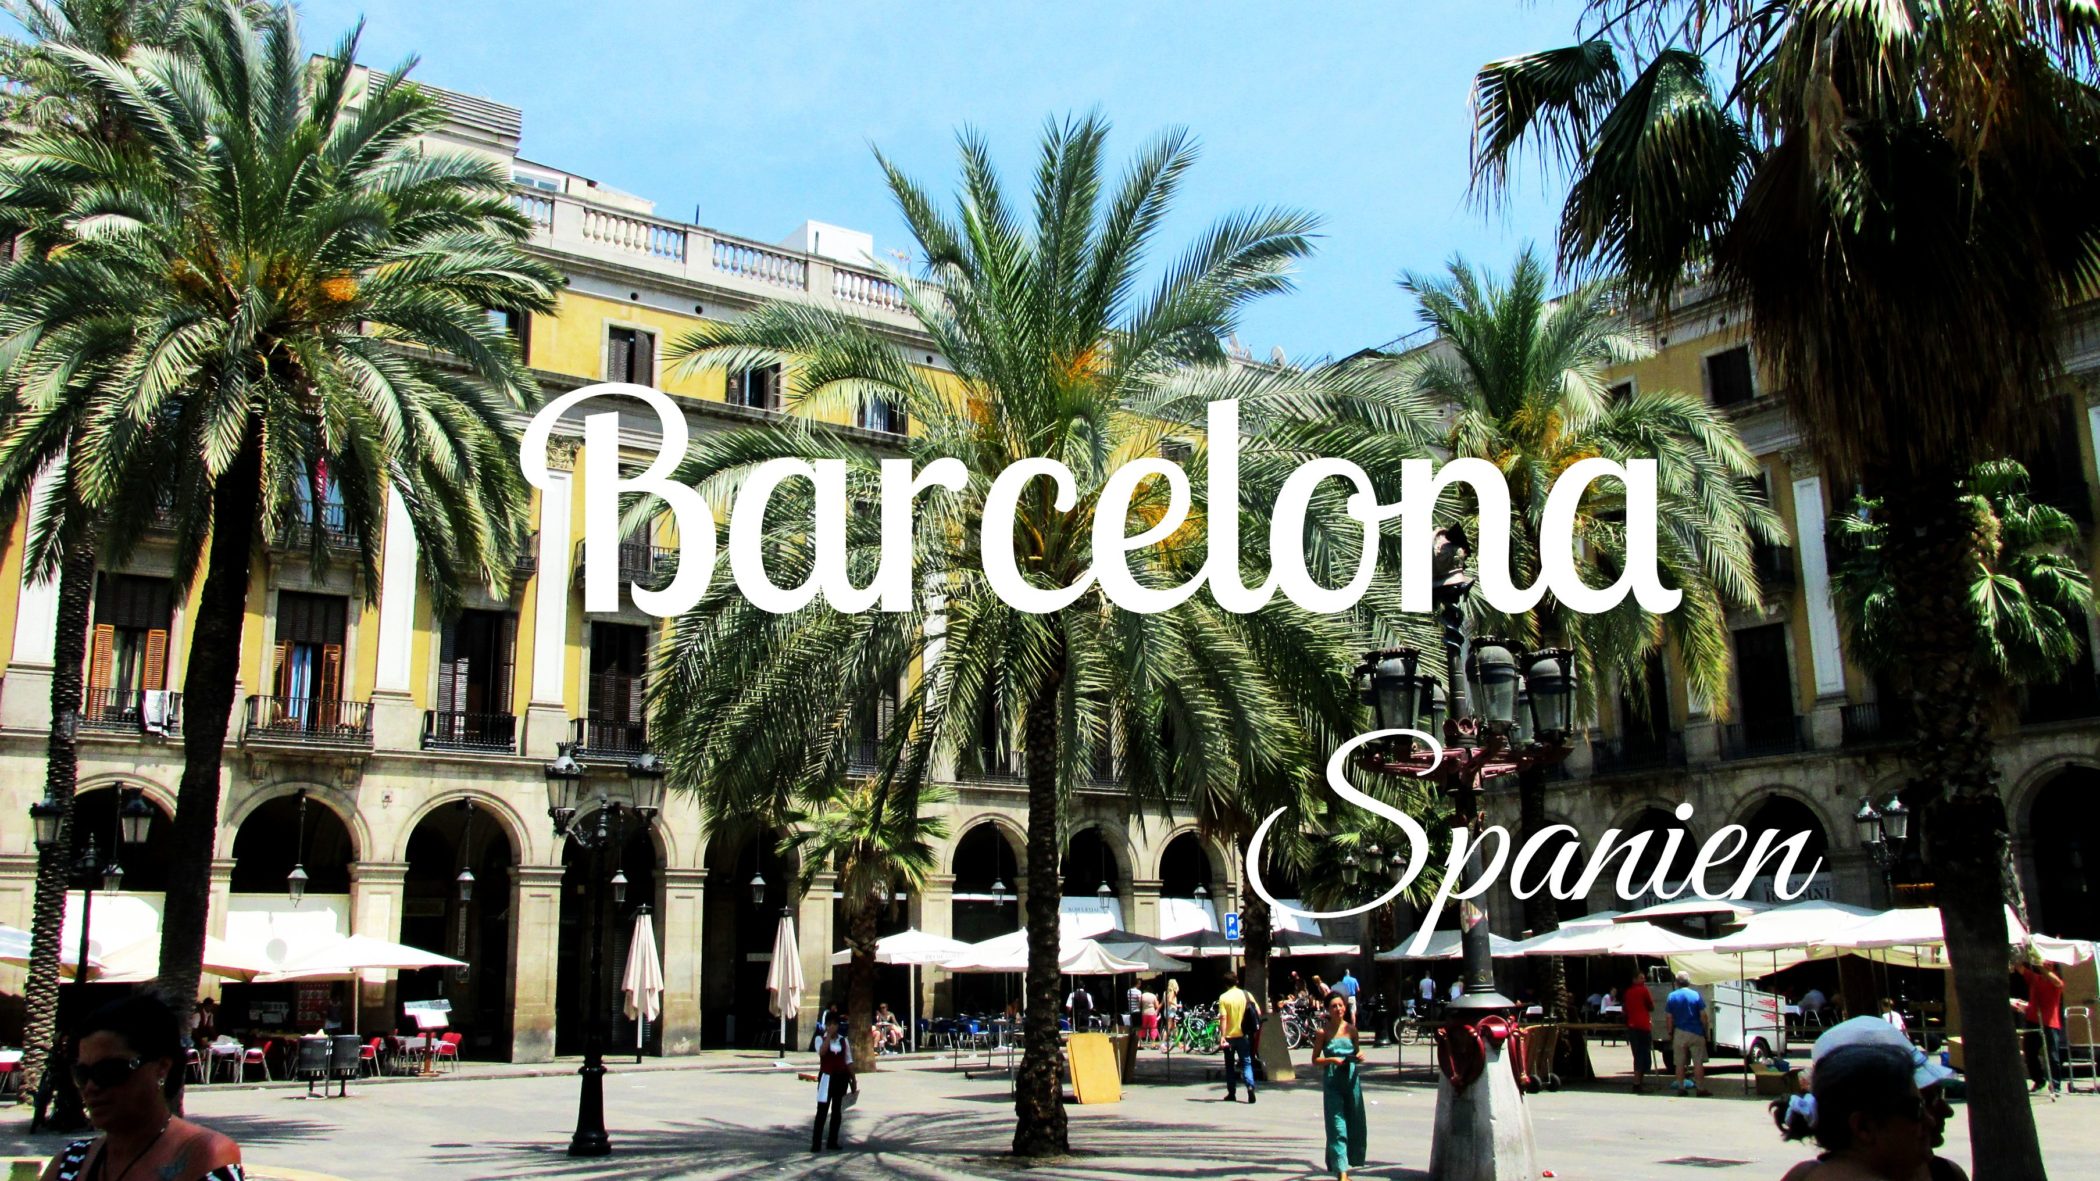 Barcelona kennenlernen